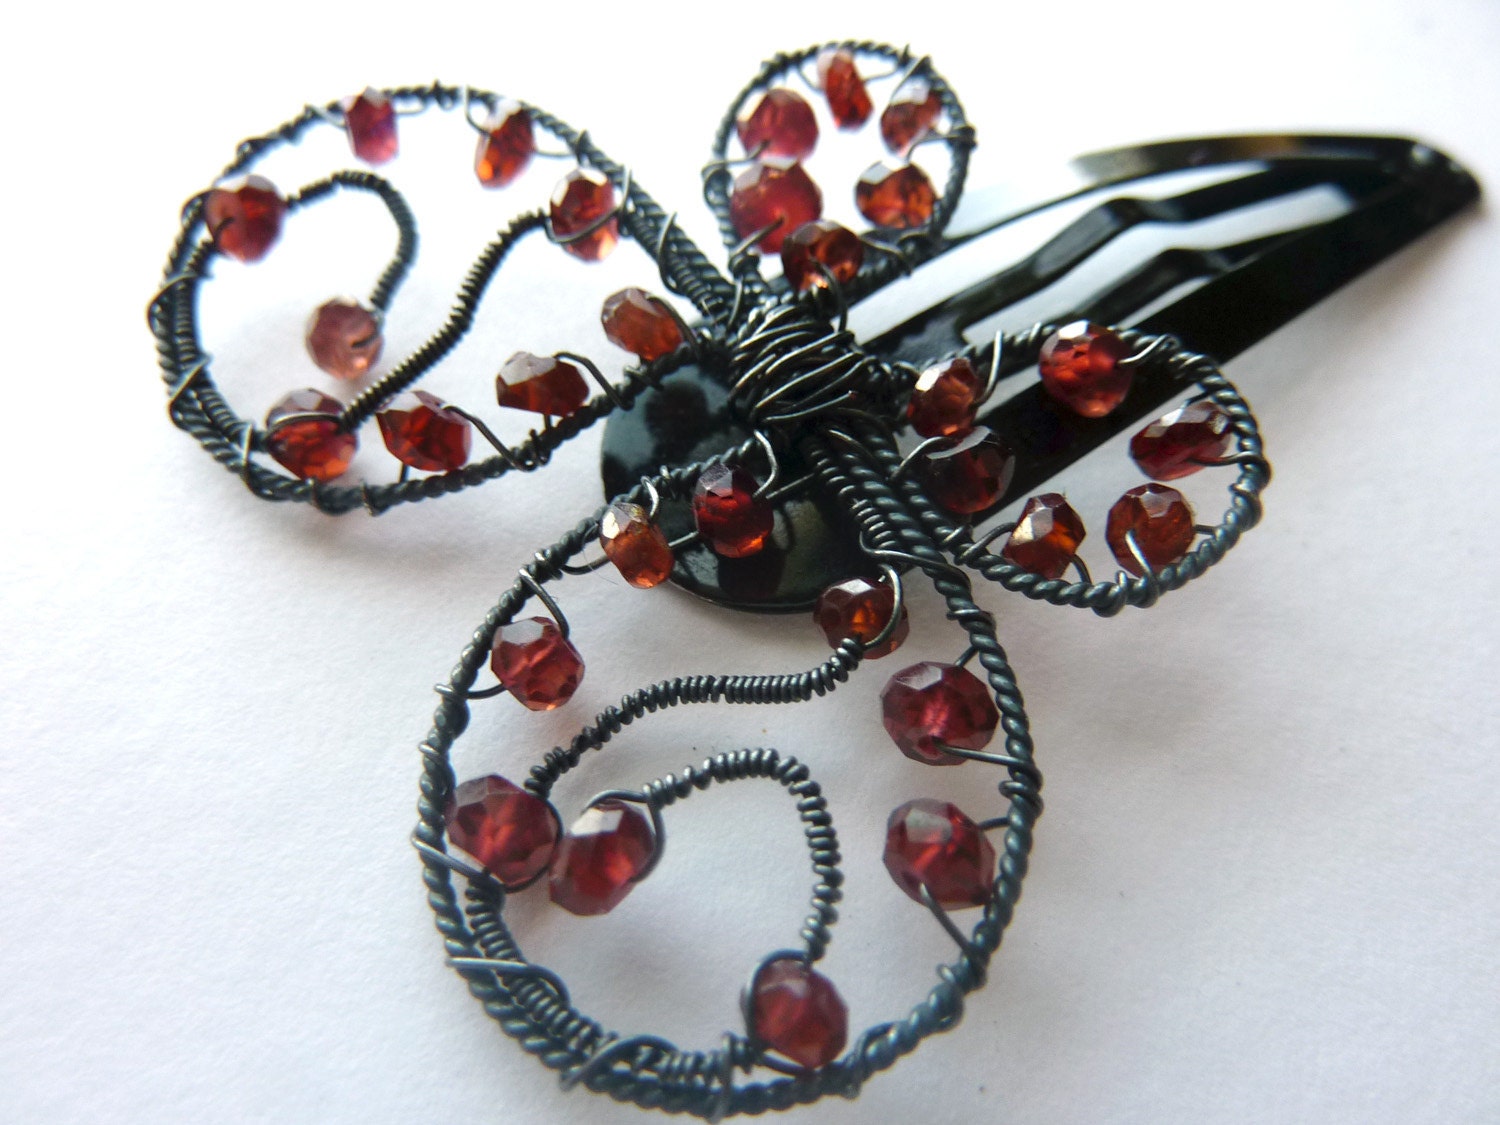 123 SALE - Garnet Oxidized Sterling Butterfly Hair clip, Brooch or Bouquet Decoration